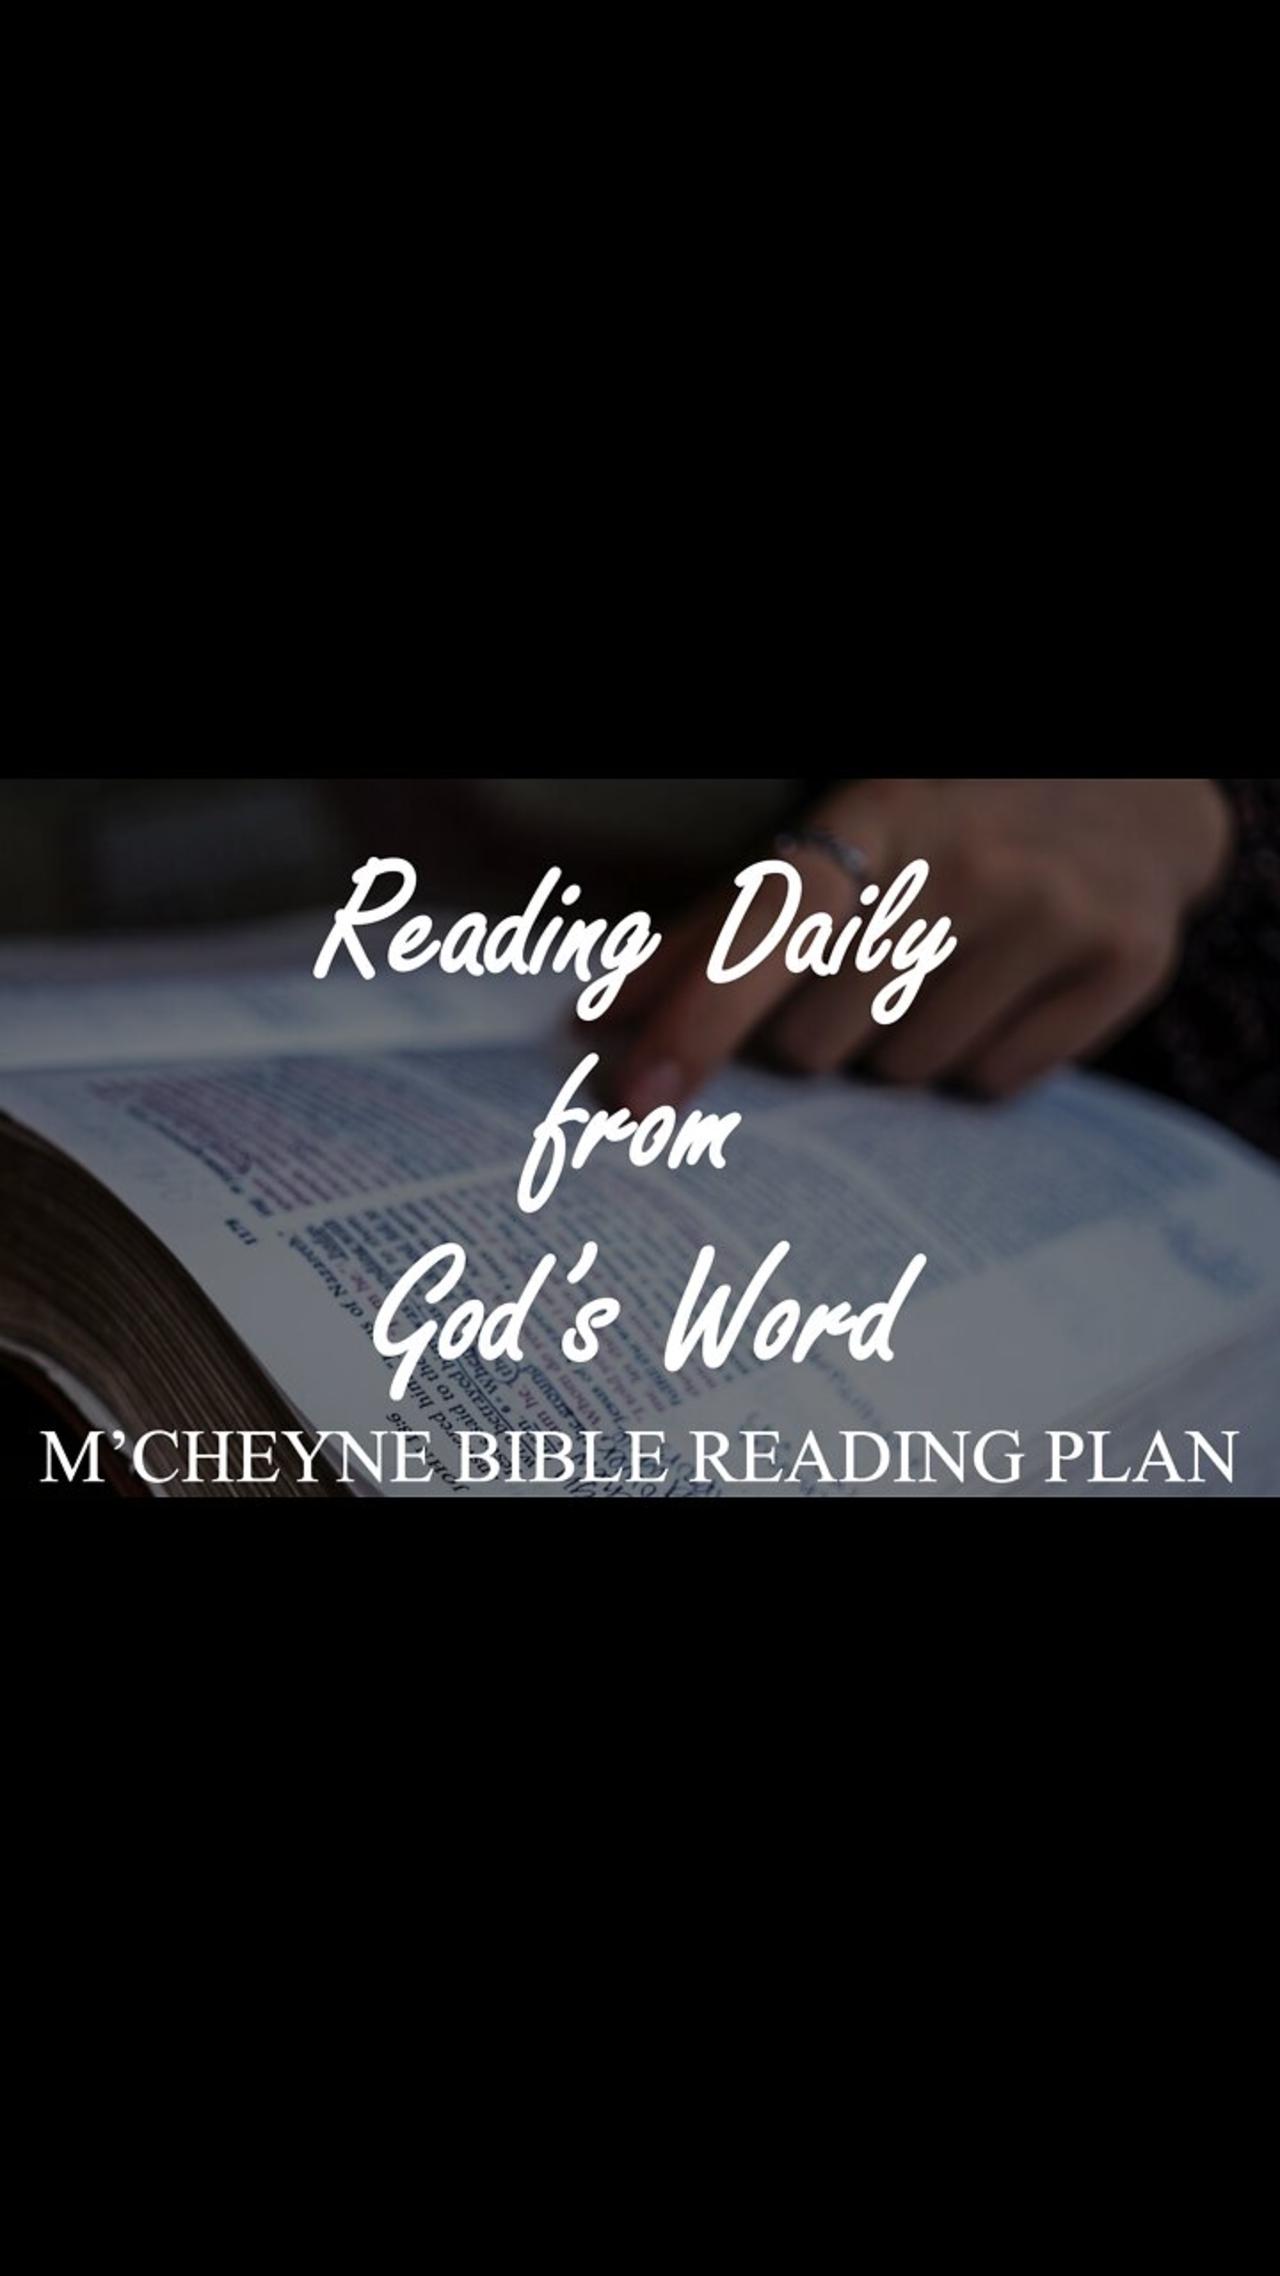 M’CHEYNE BIBLE READING PLAN - September 8